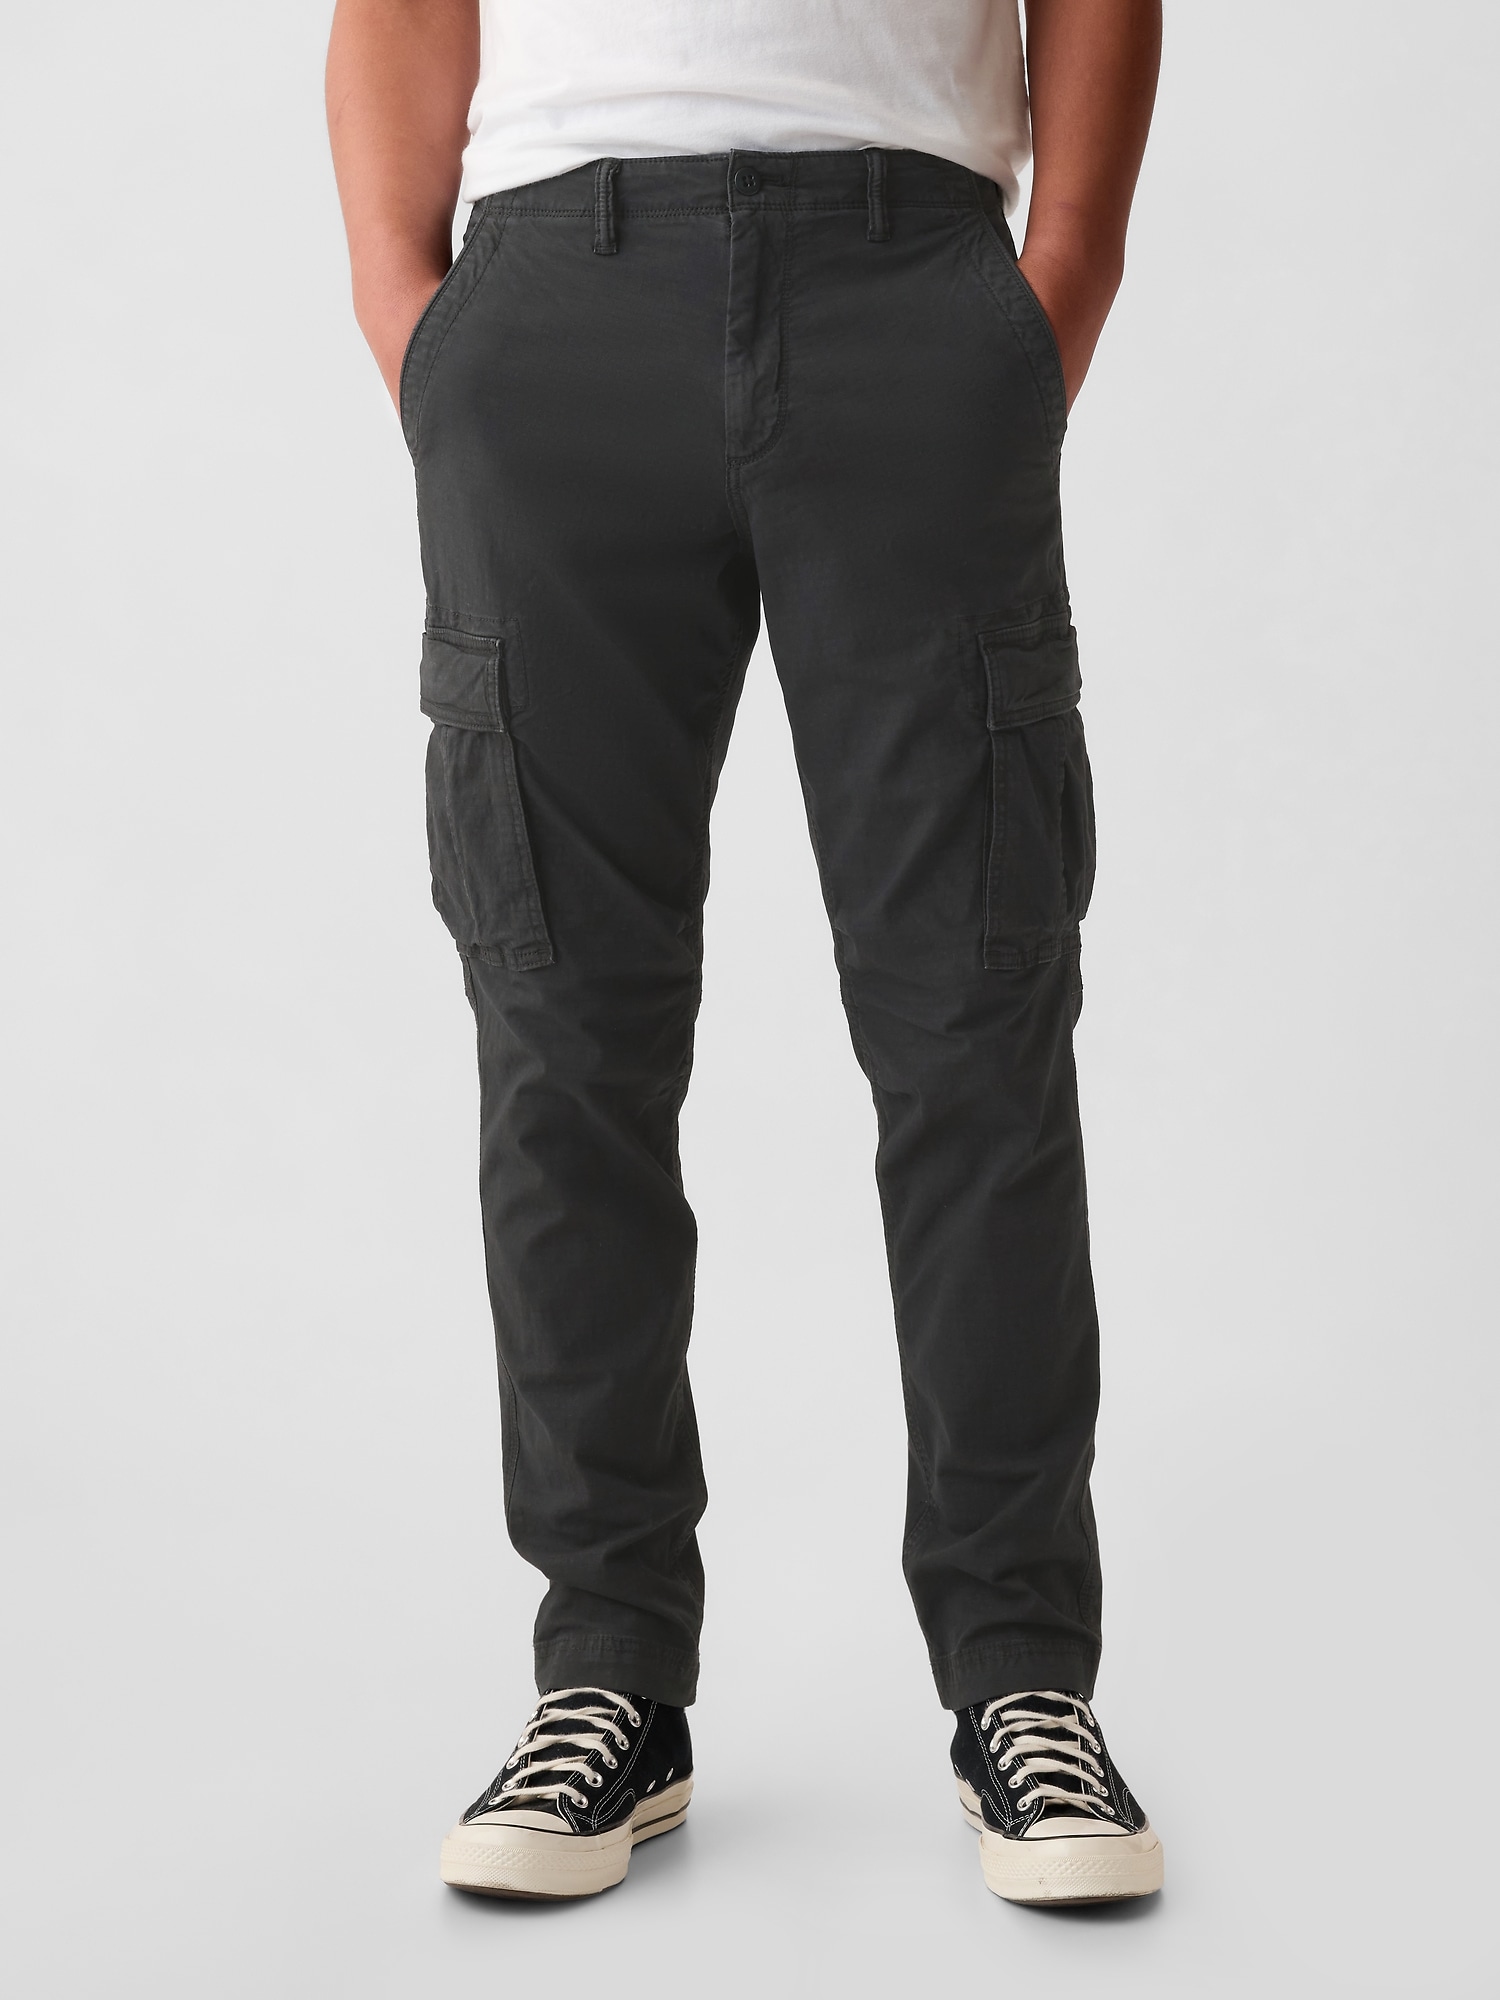 Men's Oversized Black Cargo Pants With Pockets